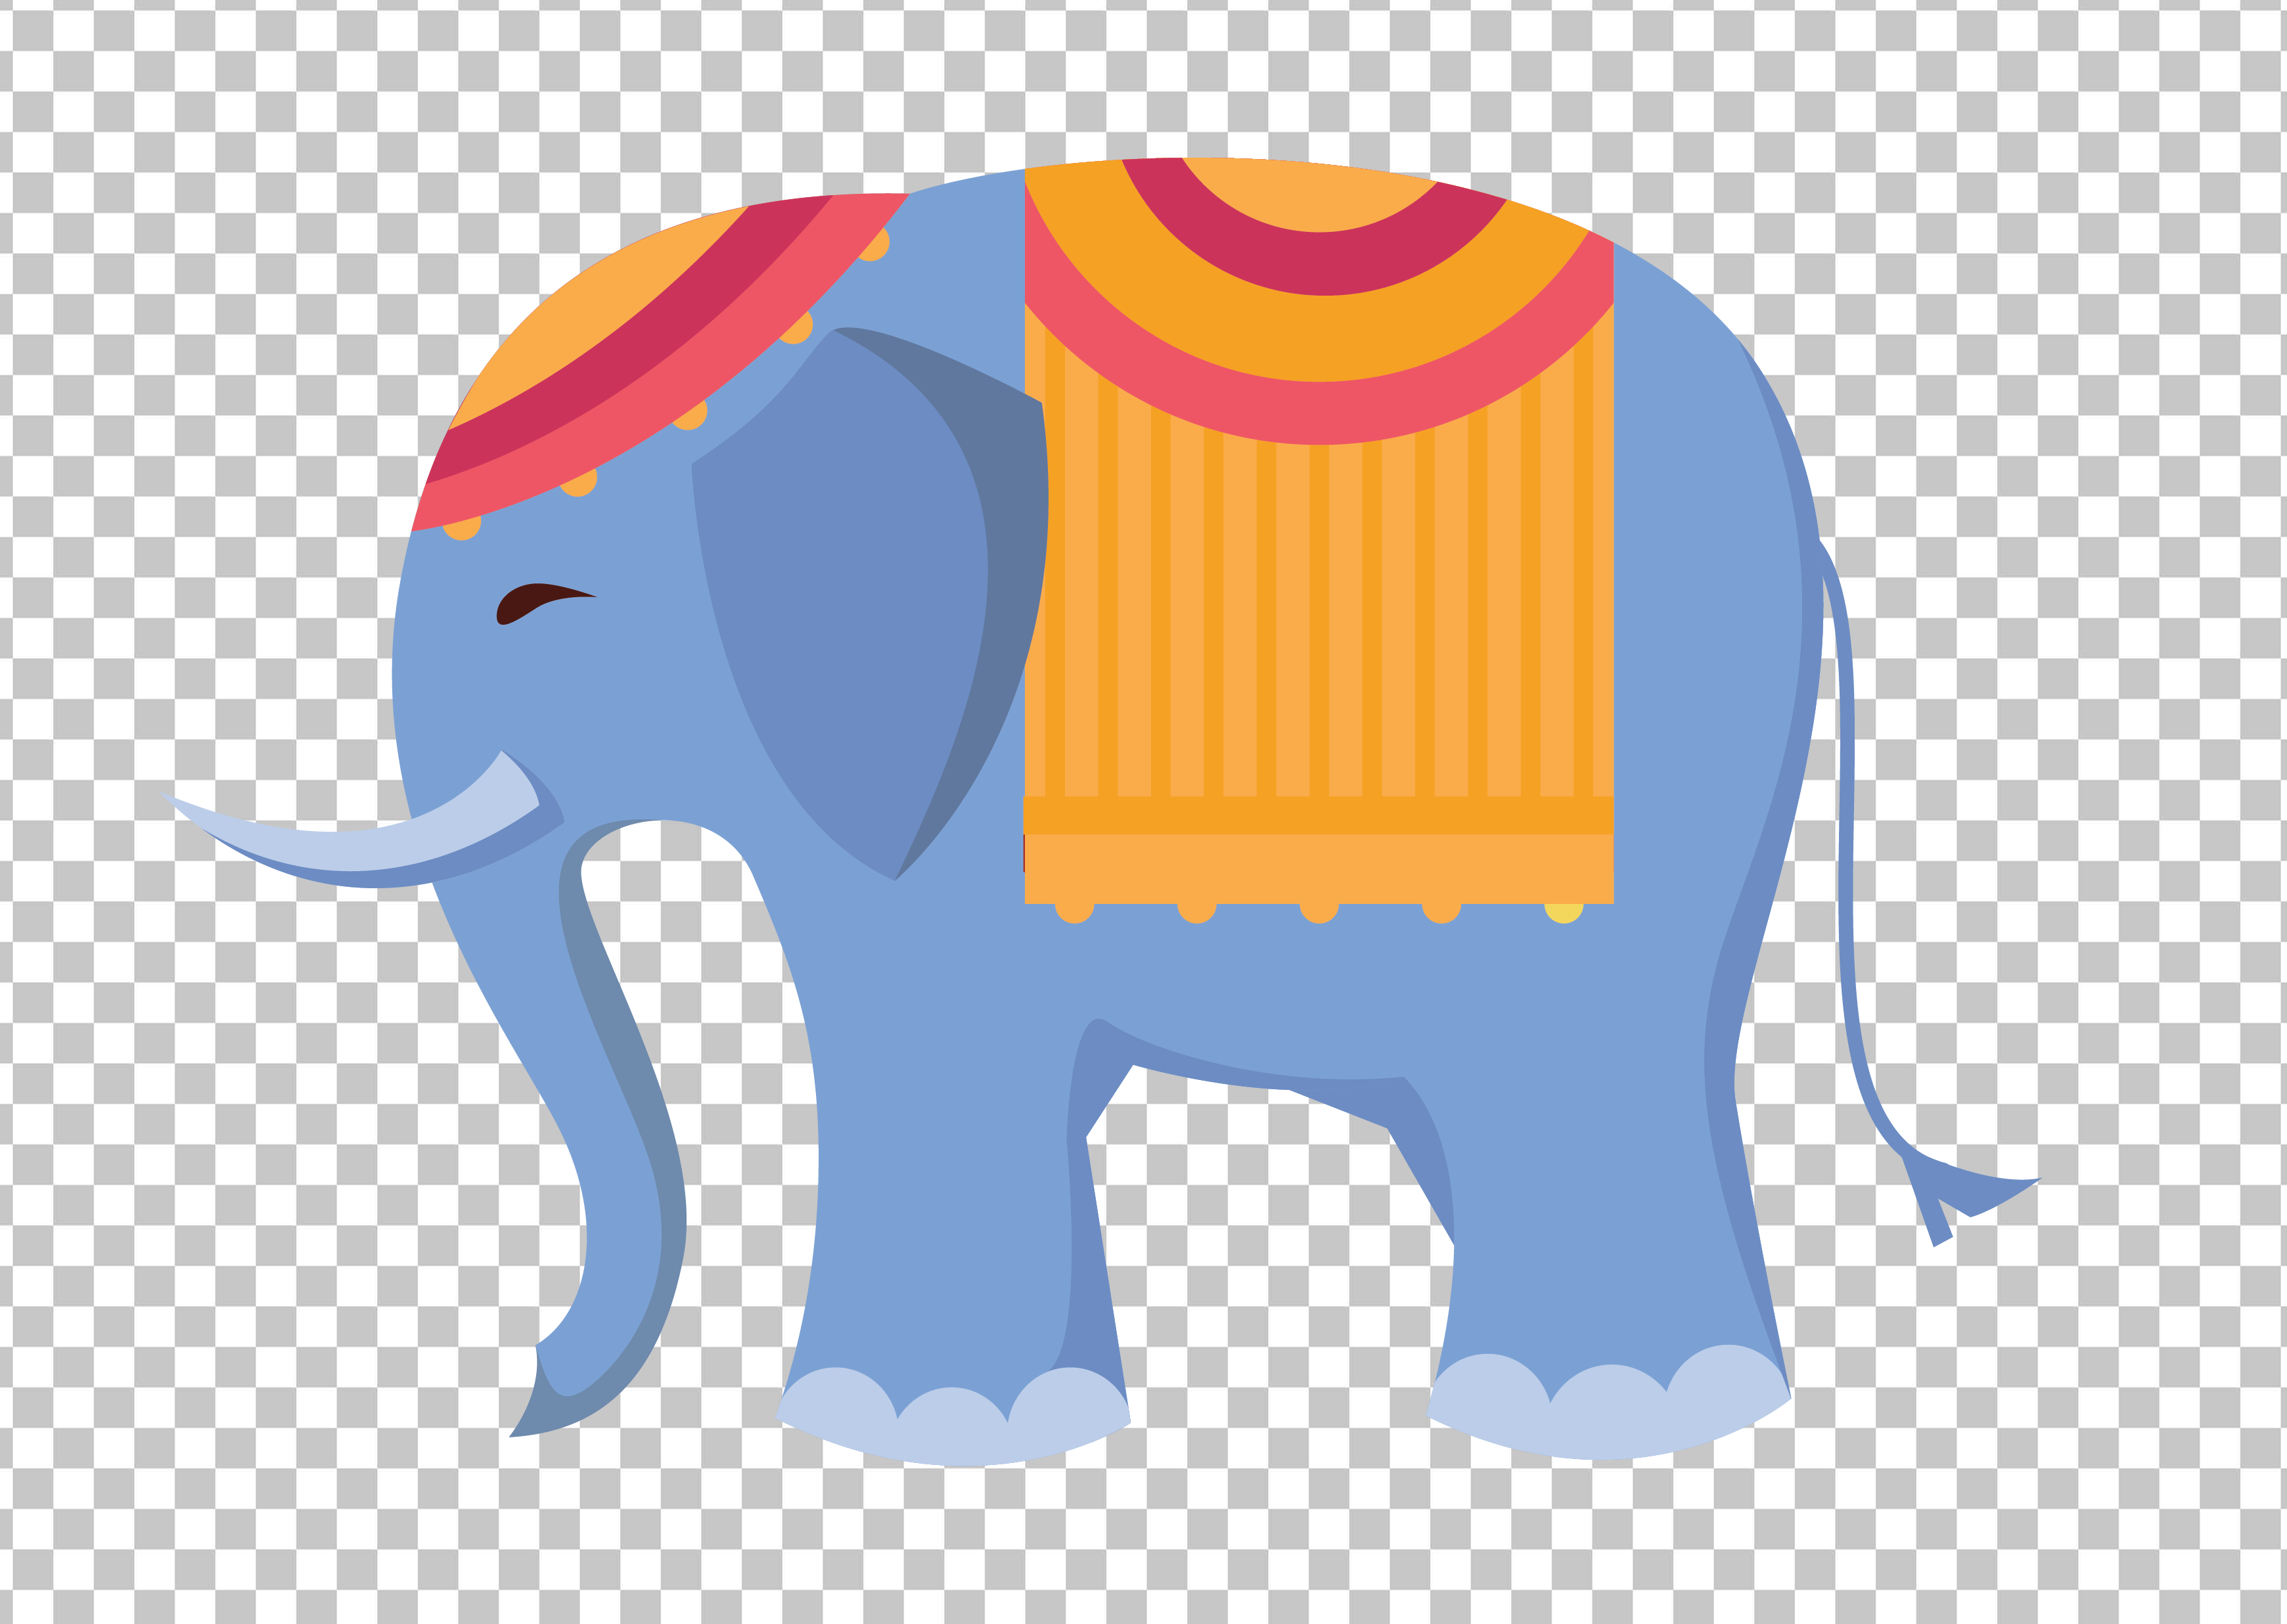 Diwali blue Elephant Vector PNG Image